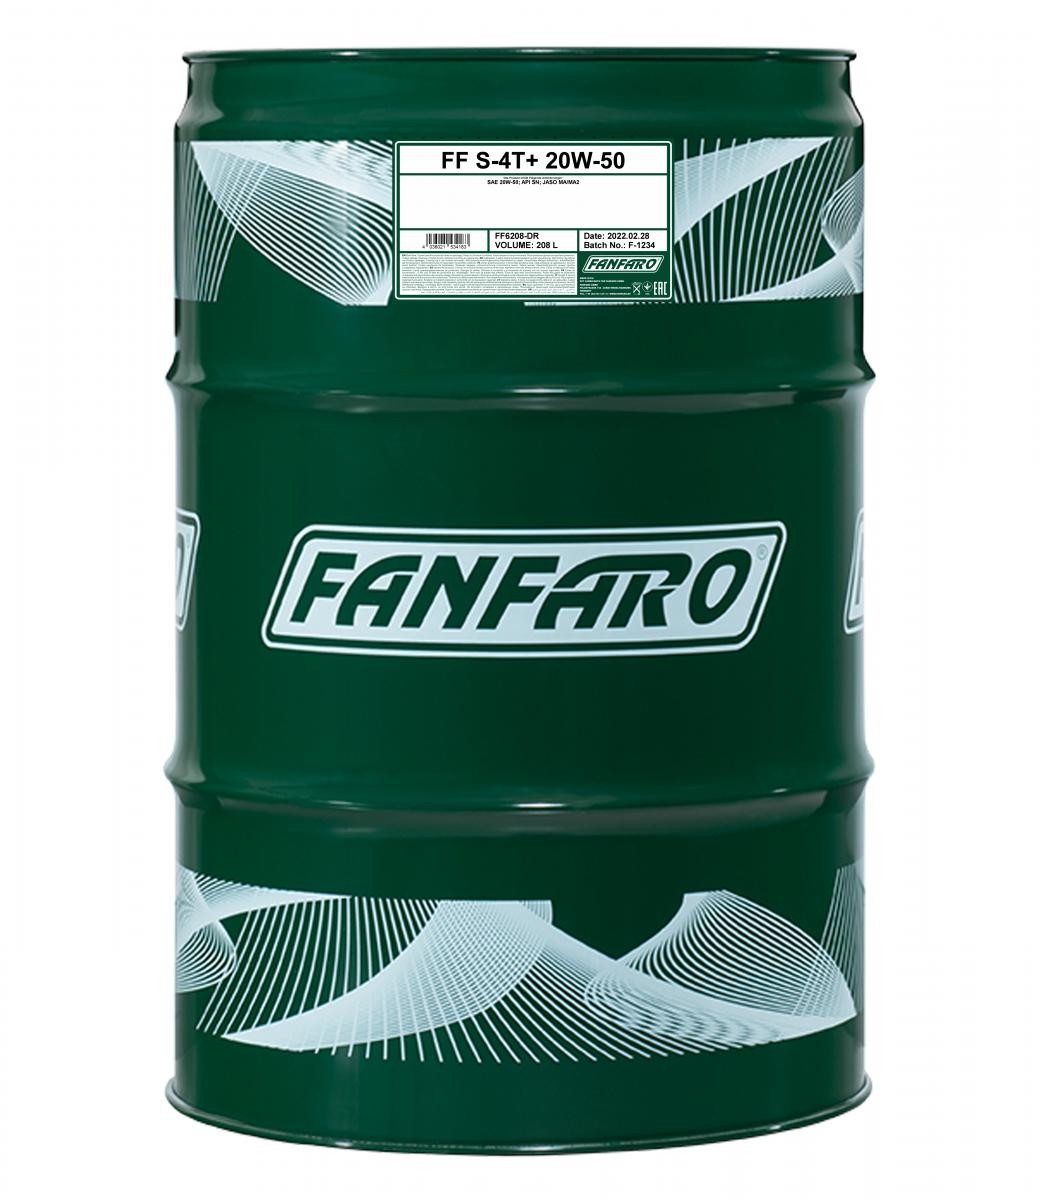 FF6208-DR FANFARO Oil SUZUKI 20W-50, 208l, Synthetic Oil